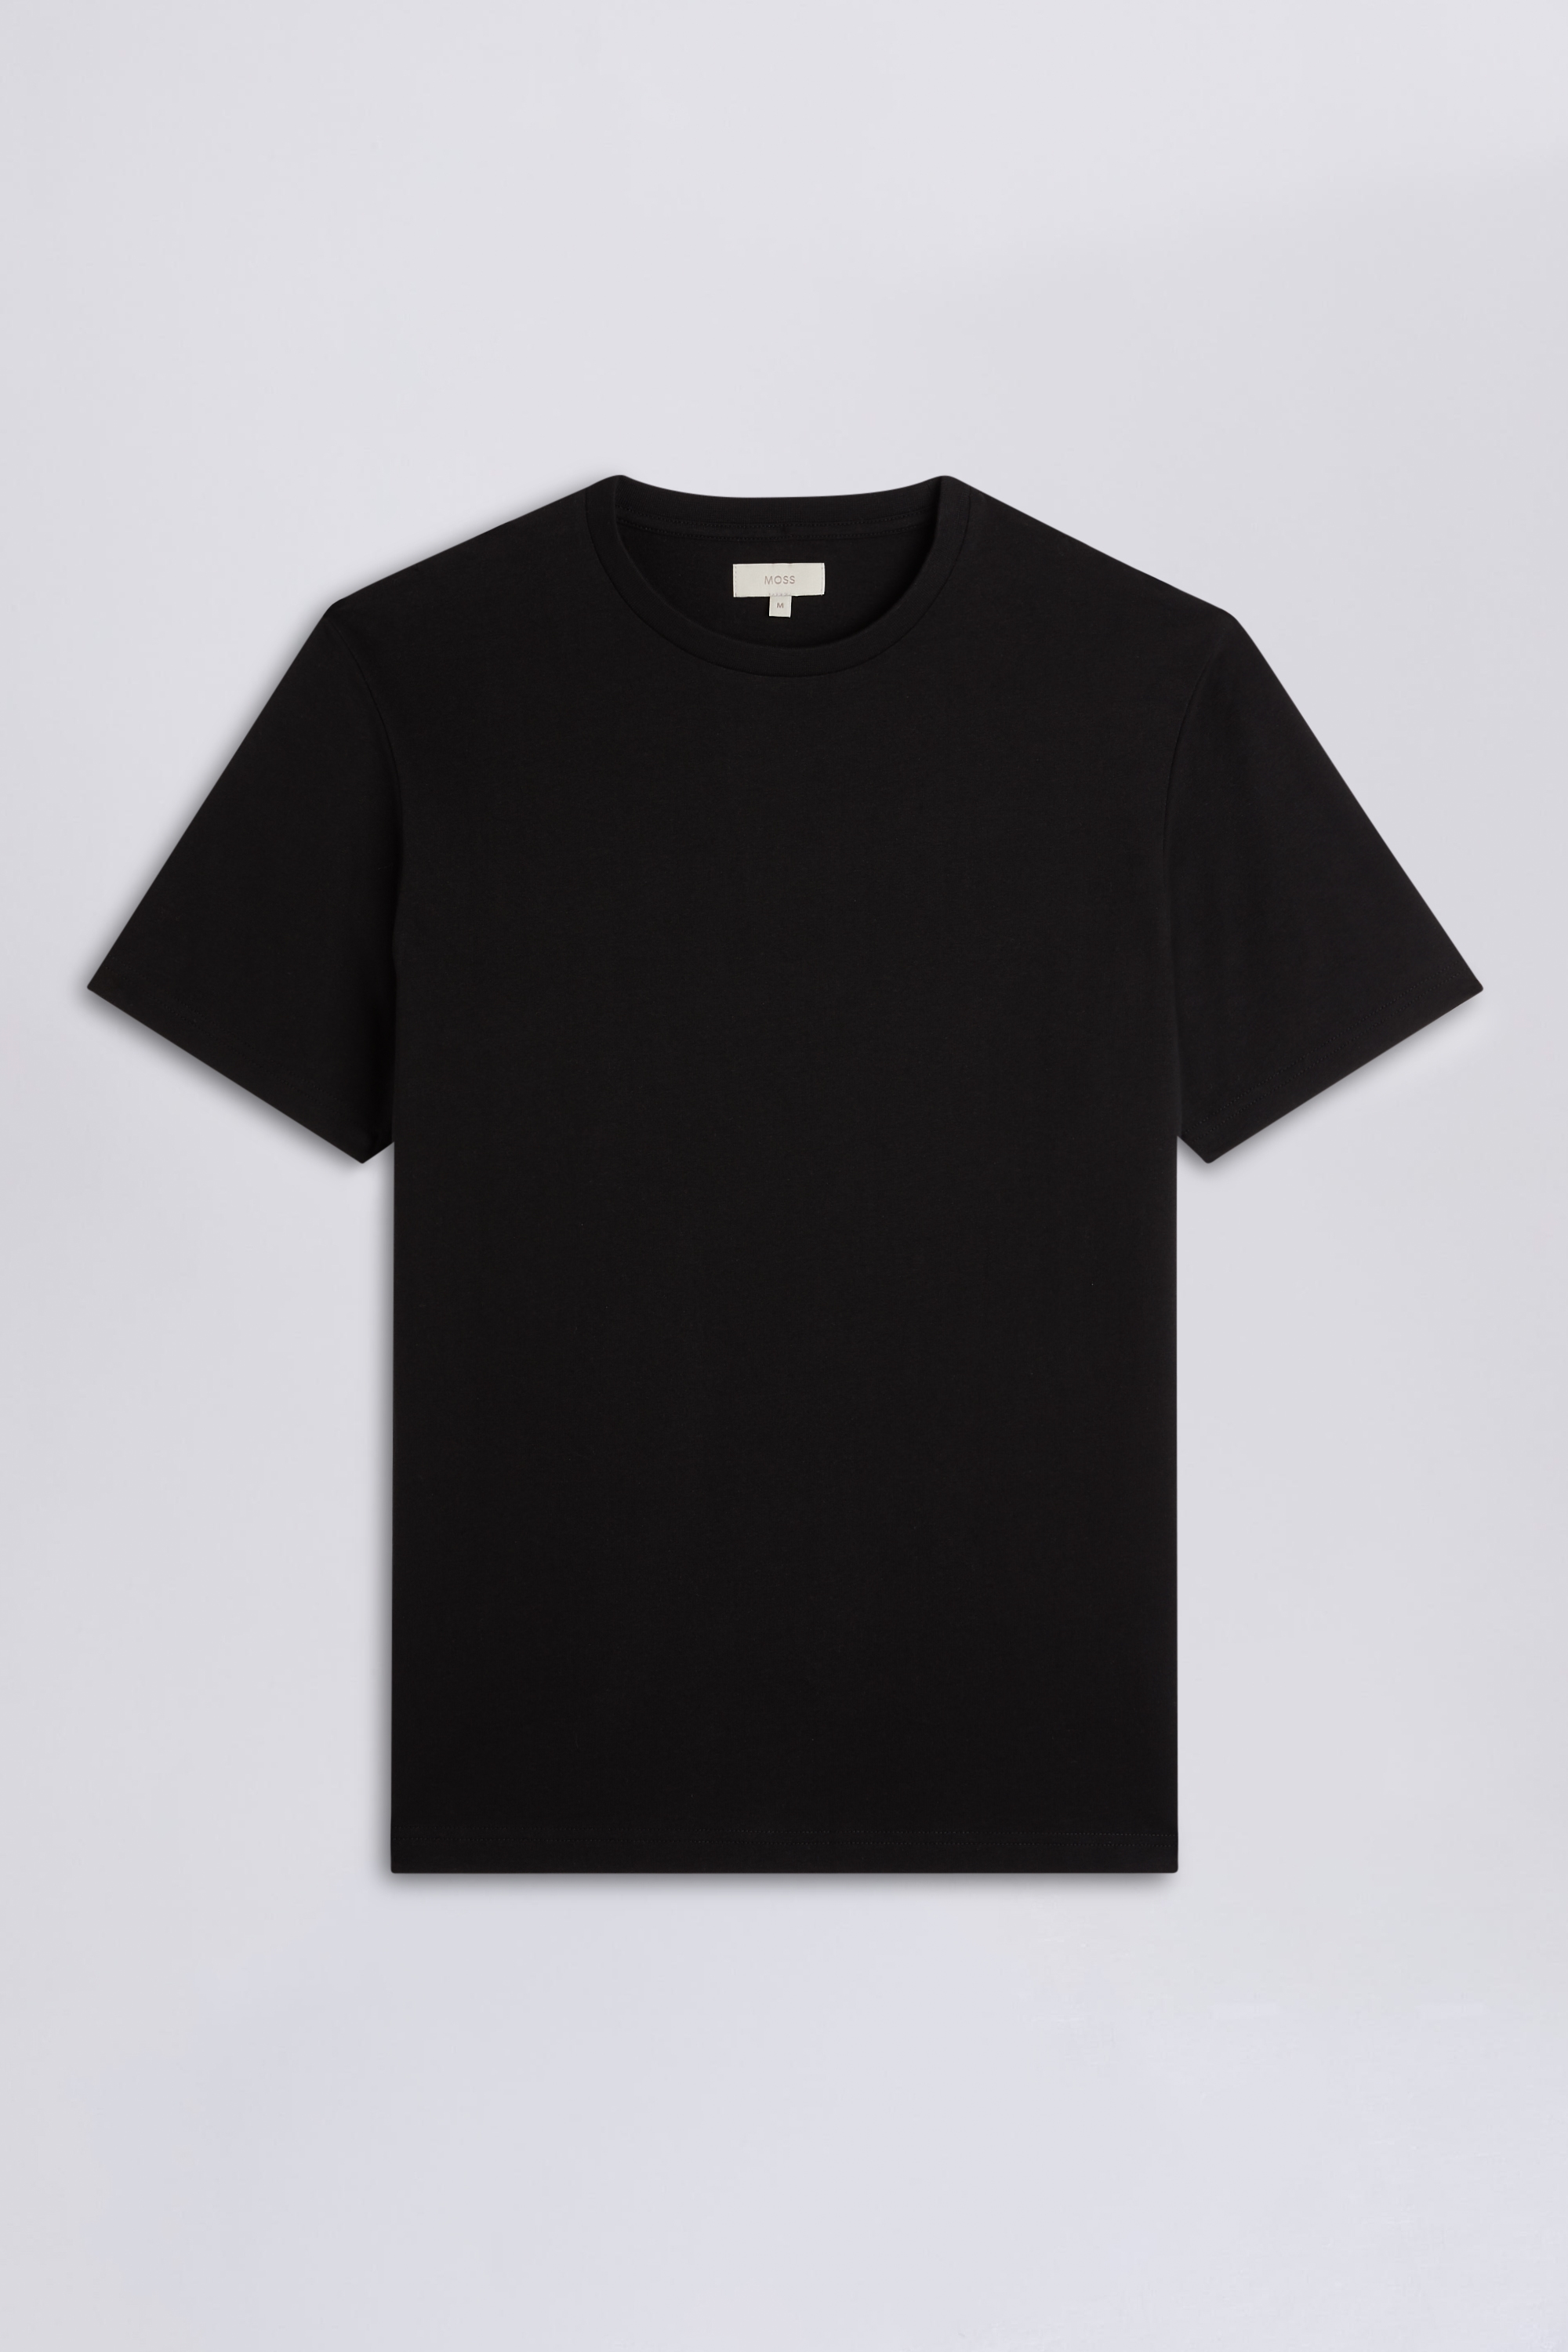 Black Crew Neck T-Shirt | Buy Online at Moss